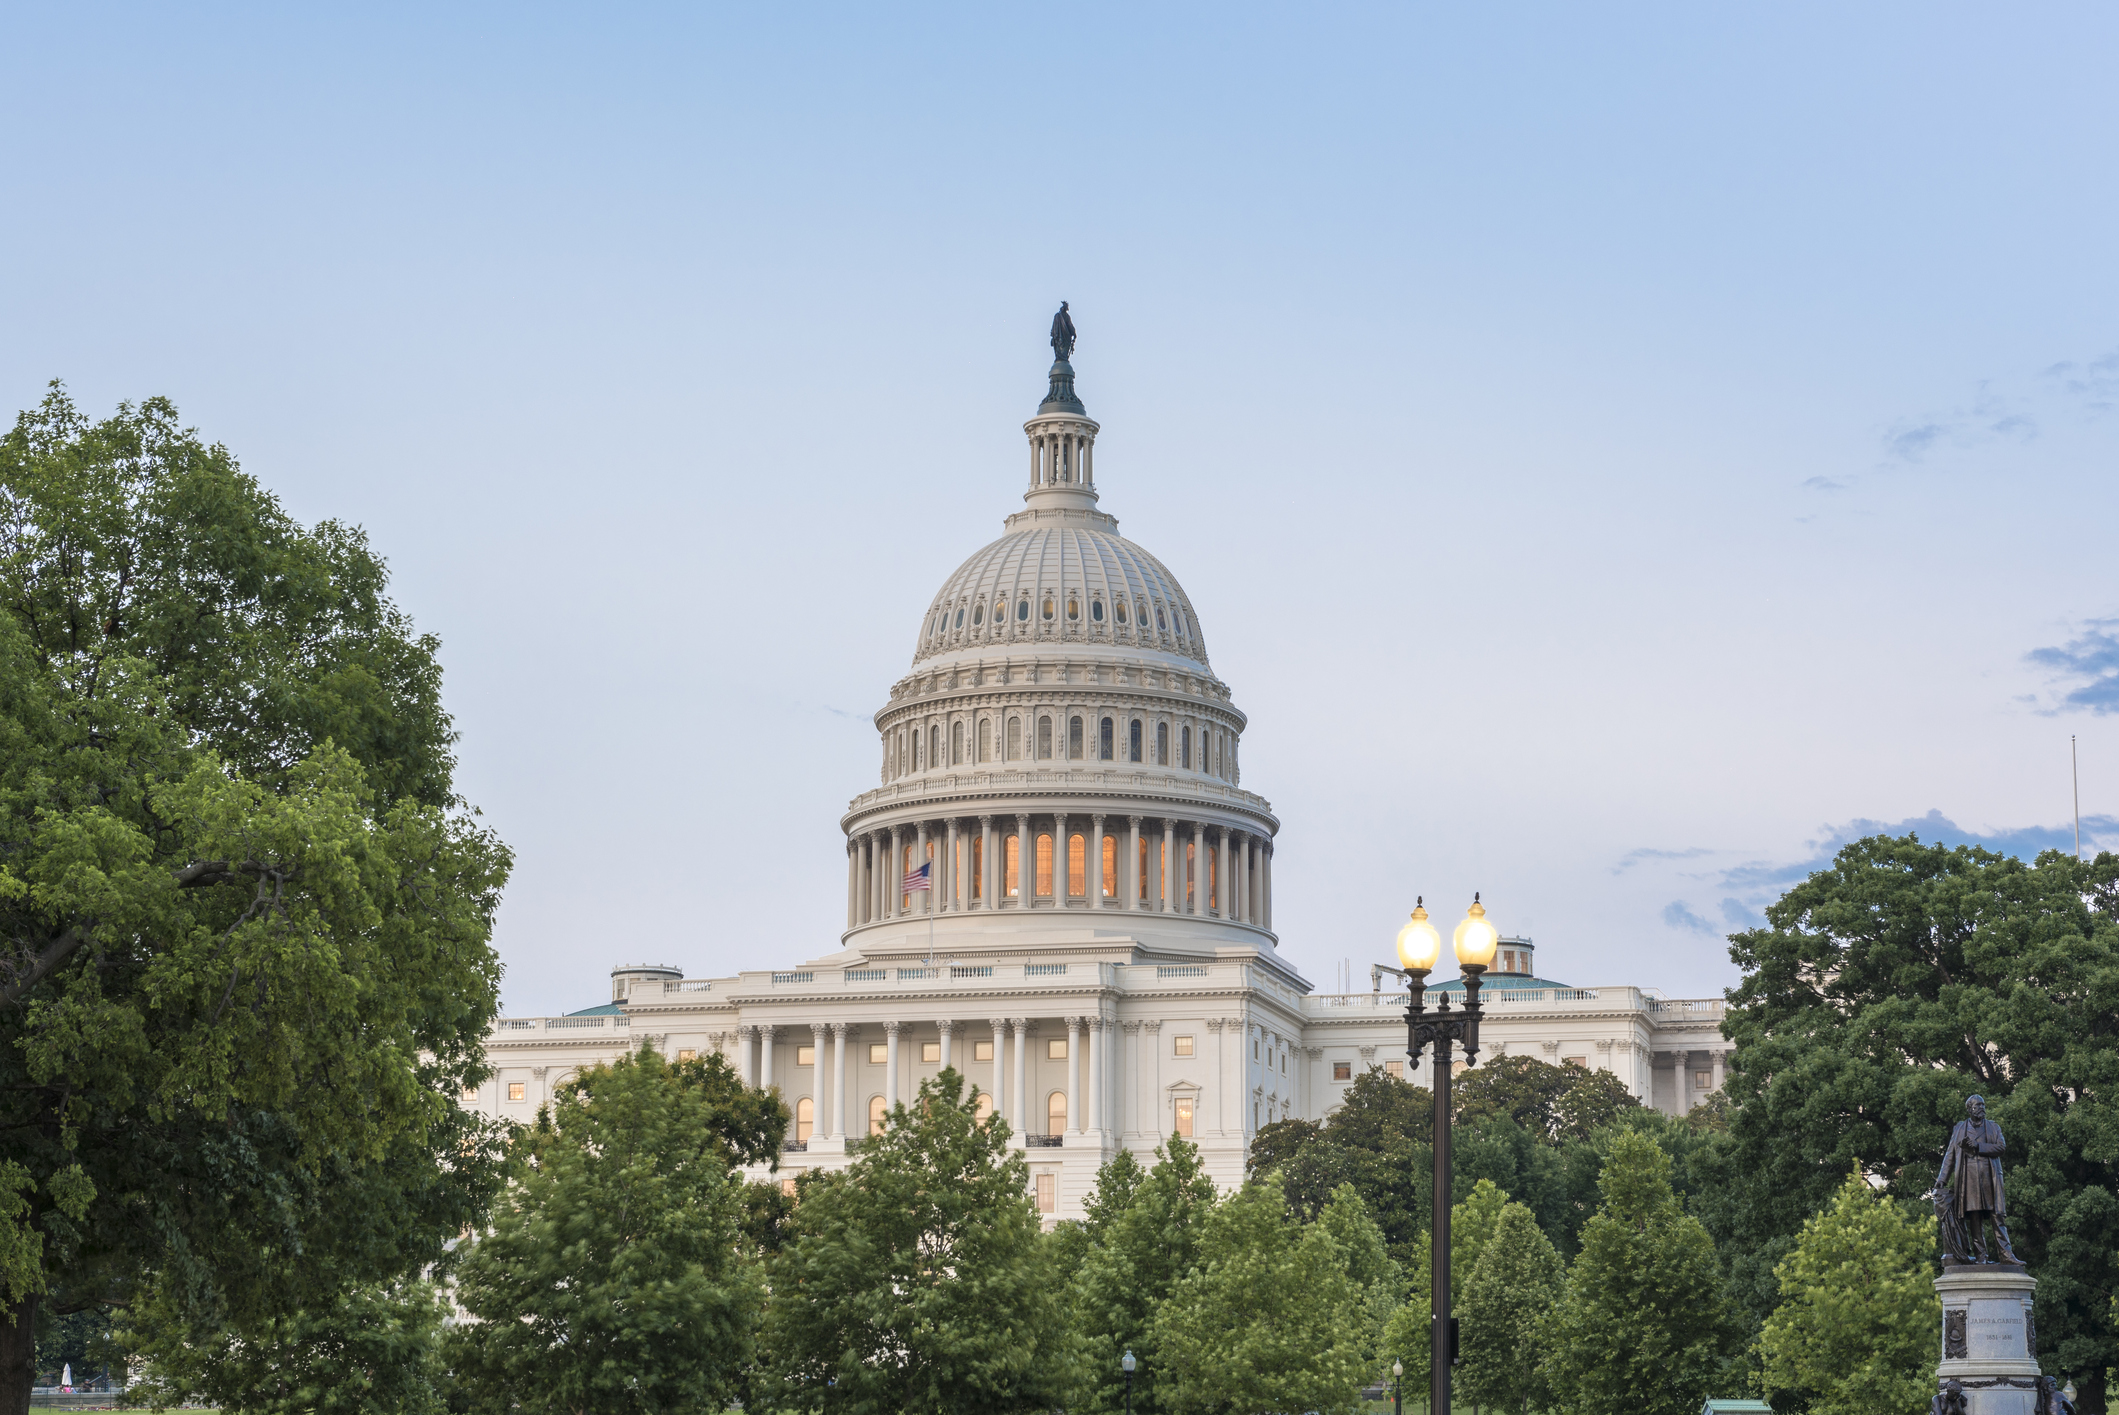 U.S. Capitol building in Washington DC. (Richard Sharrocks—Getty Images)